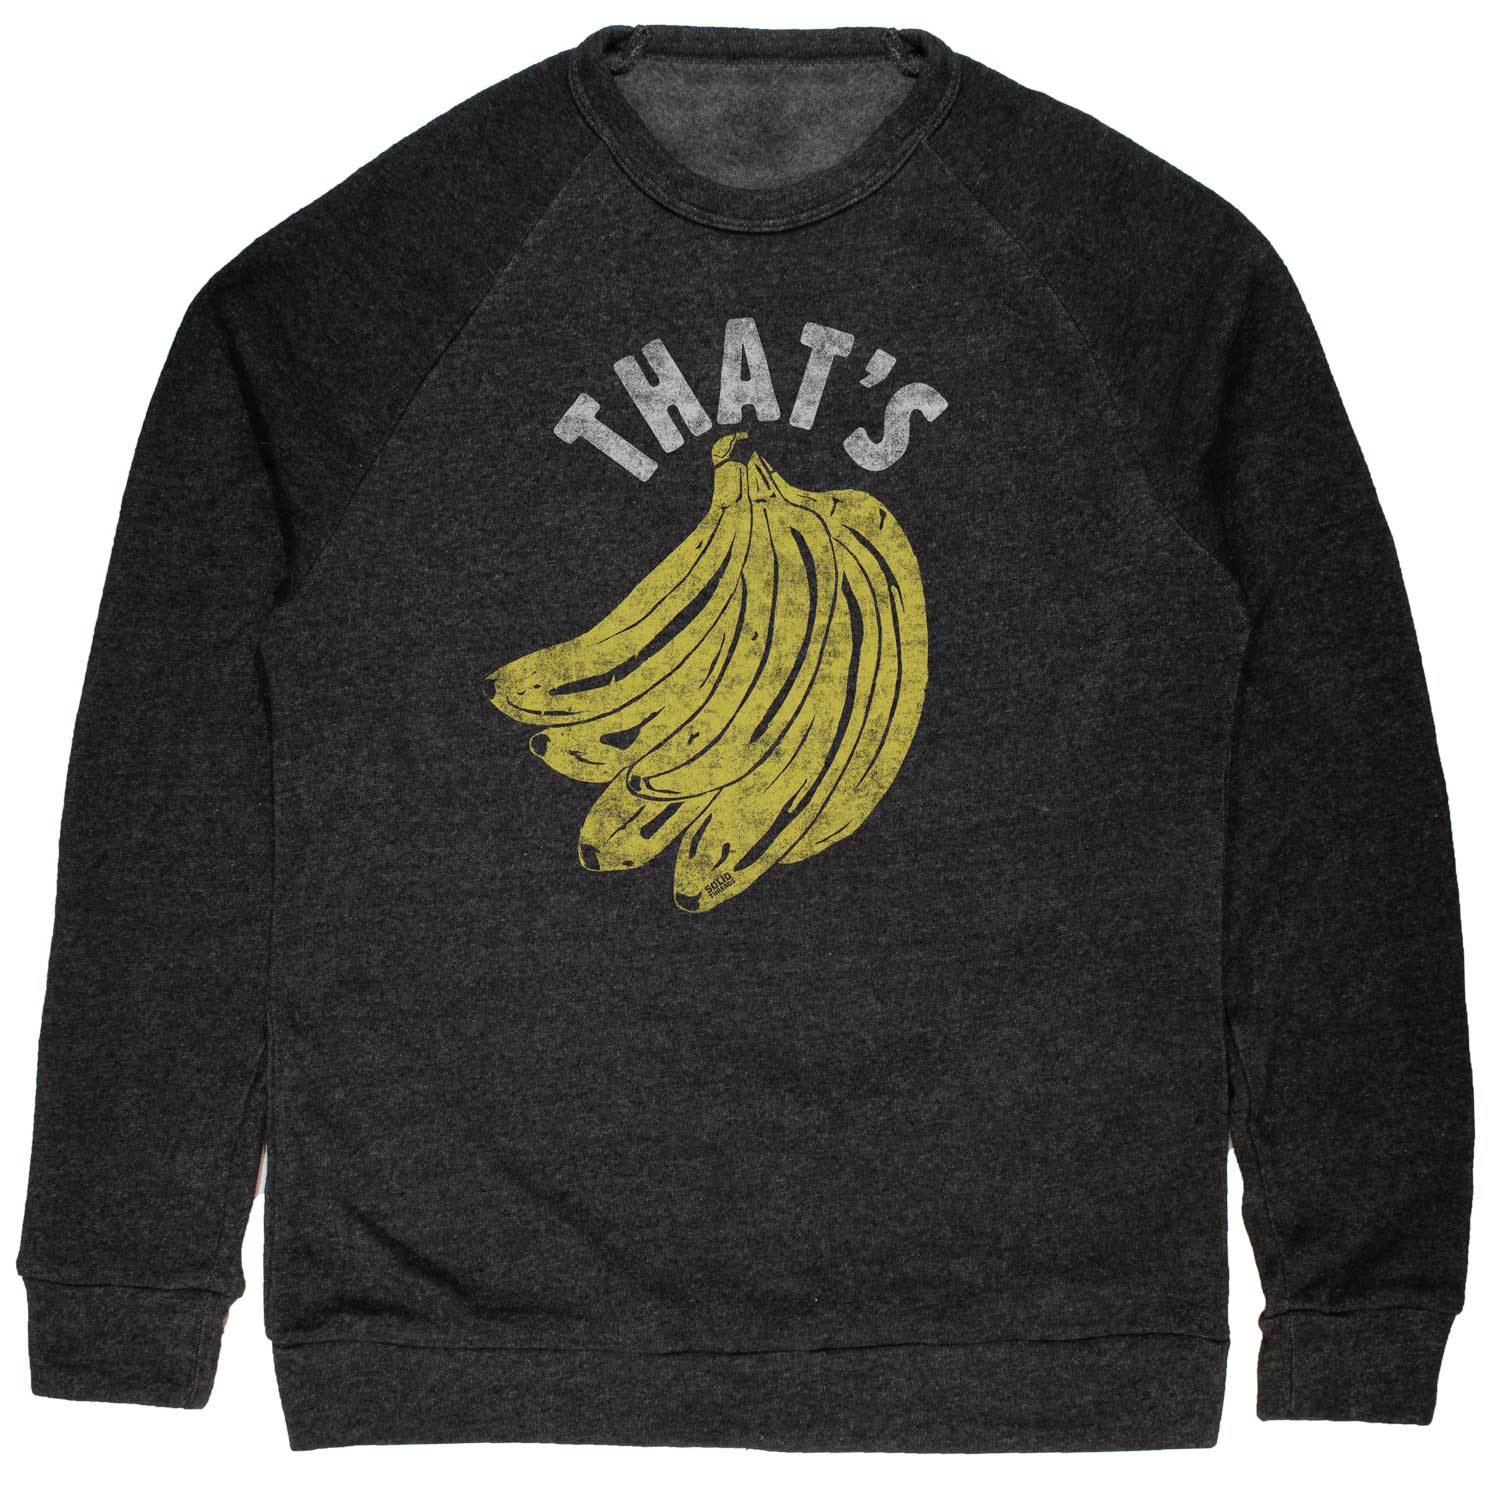 That's Bananas Vintage Inspired Fleece Crewneck Sweatshirt with cool fruit graphic | Solid Threads